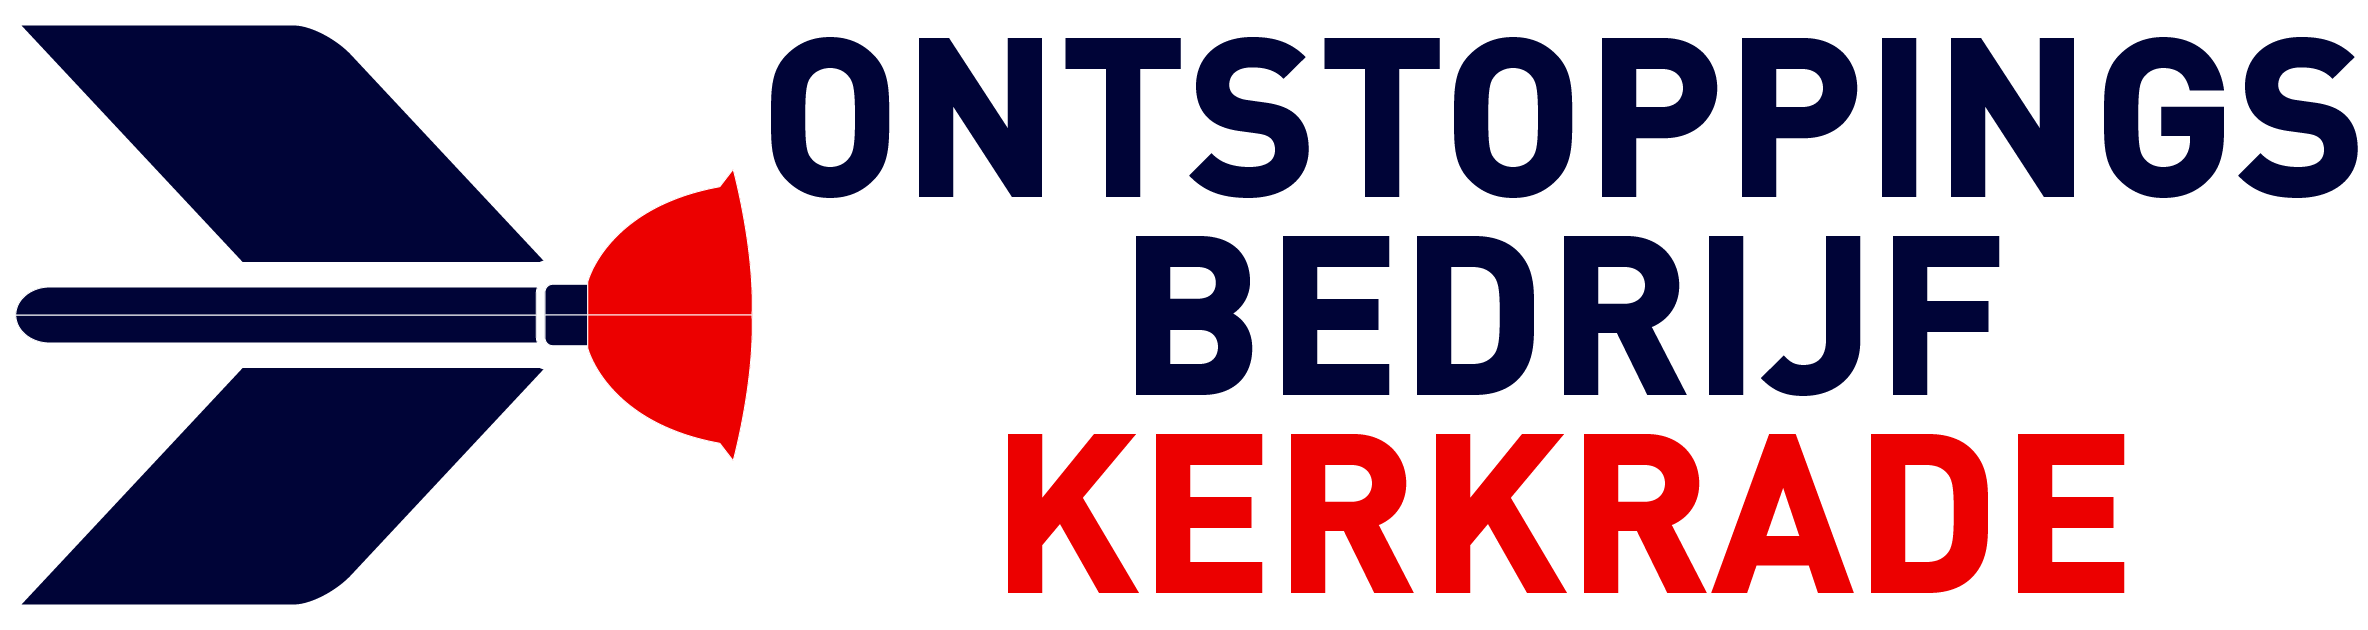 Ontstoppingsbedrijf Kerkrade logo